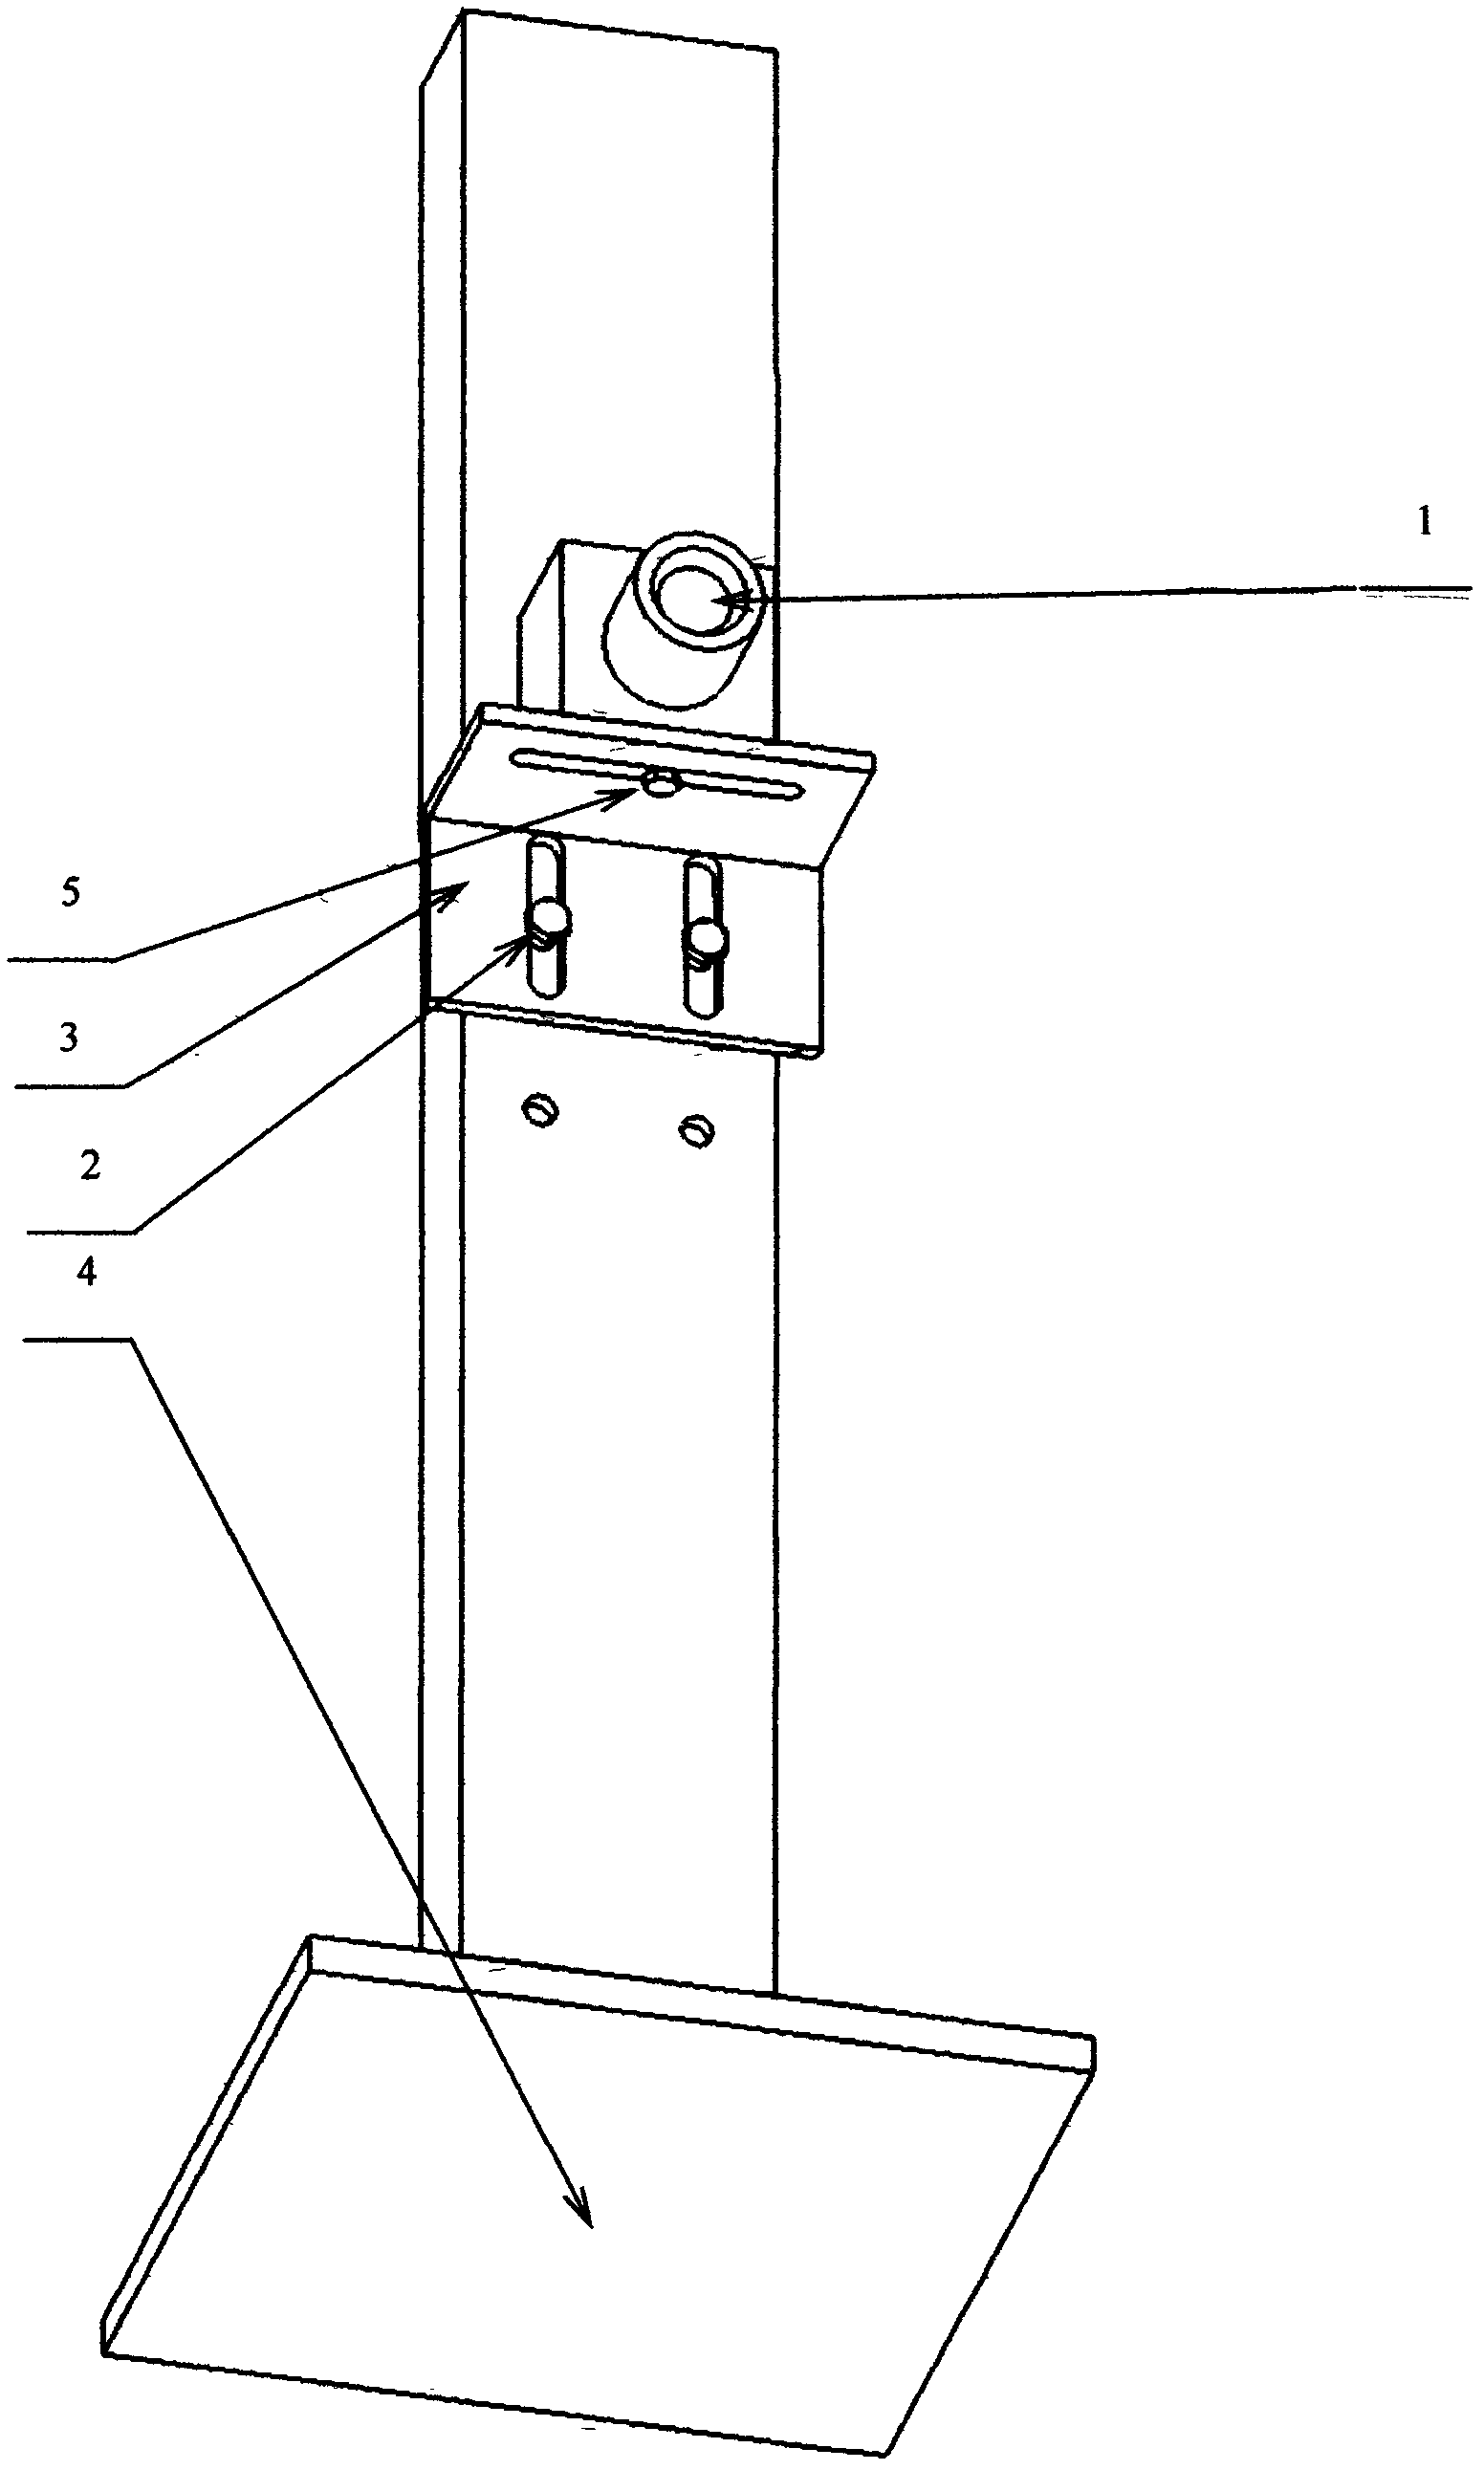 Position-adjustable camera assembly system